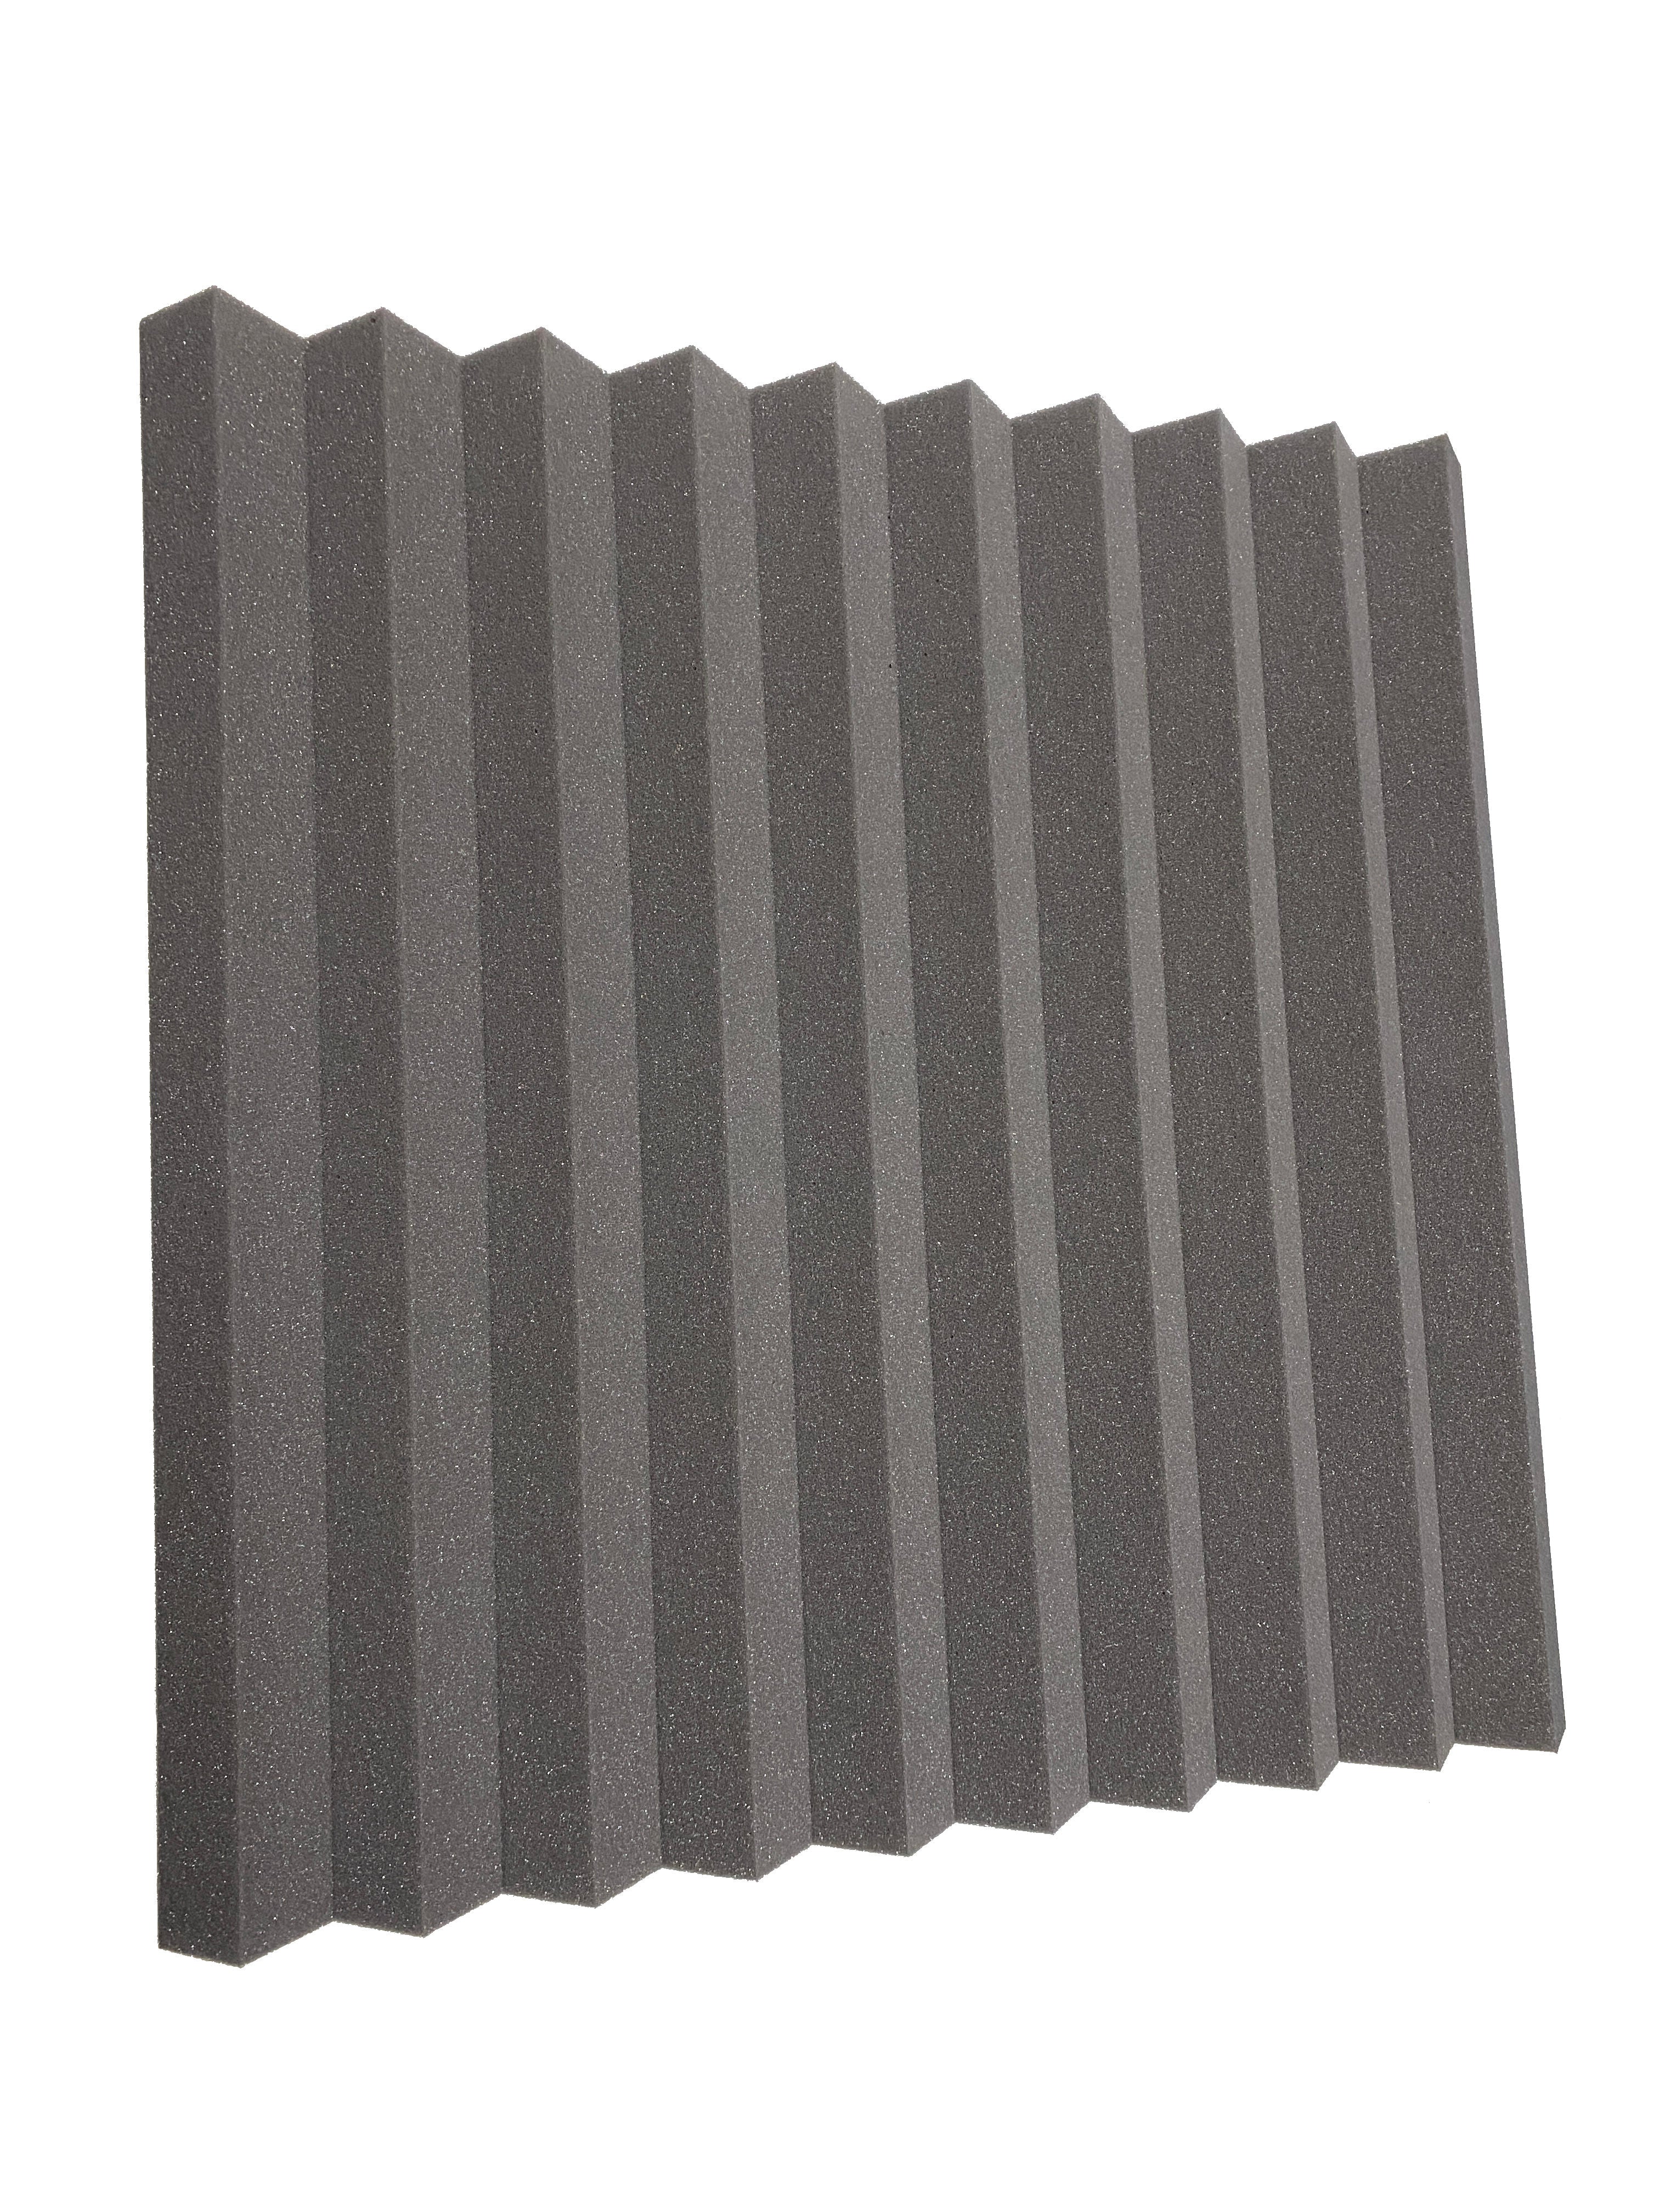 Buy mid-grey Wedge PRO 30&quot; Acoustic Studio Foam Tile Pack